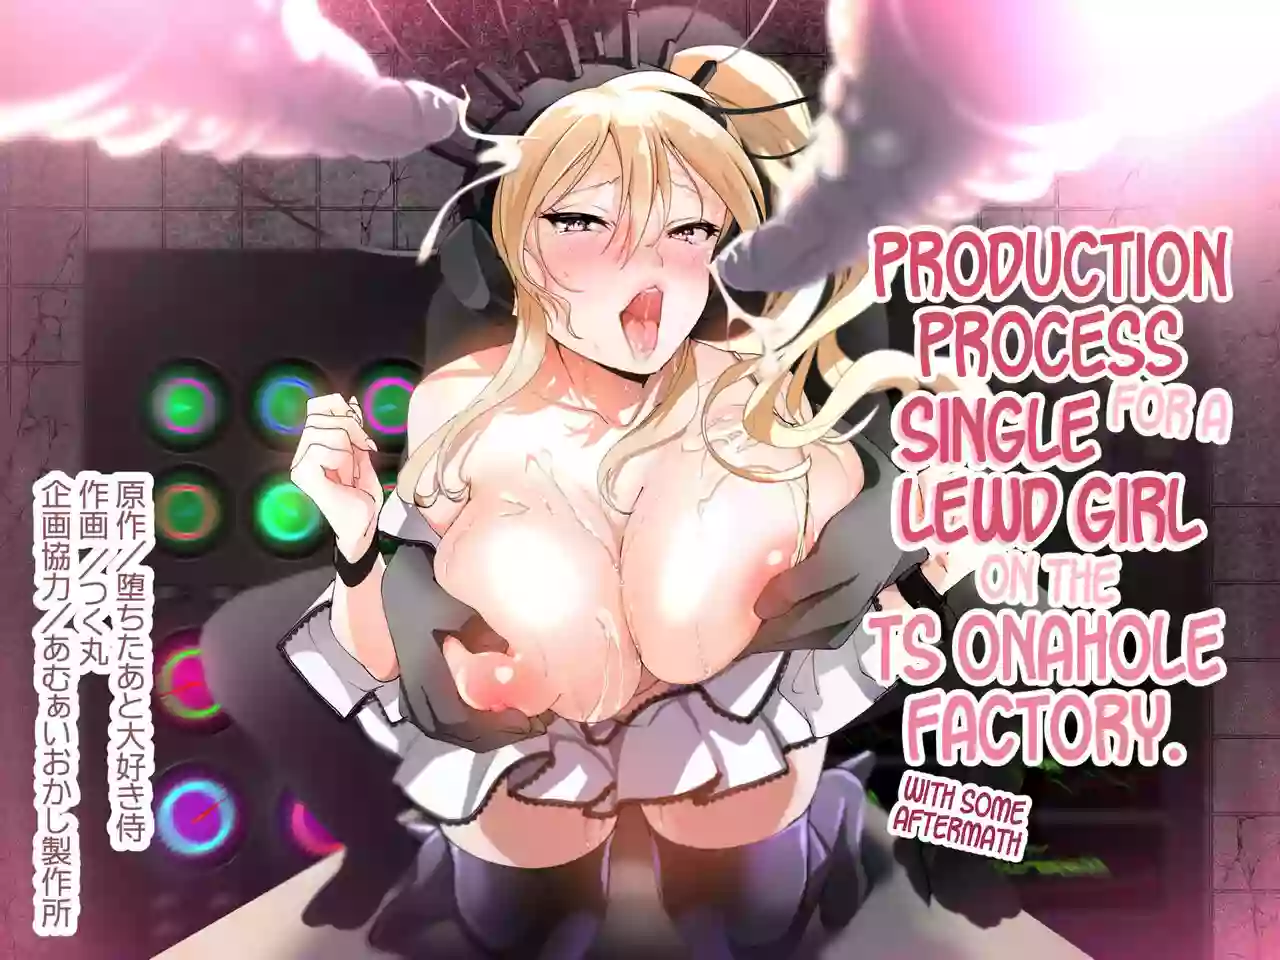 [Amuai Okashi Seisakusho (Tsukumaru)] Production Process for a Single Lewd Girl on the TS Onahole Factory. With Some Aftermath [English] [GTF]